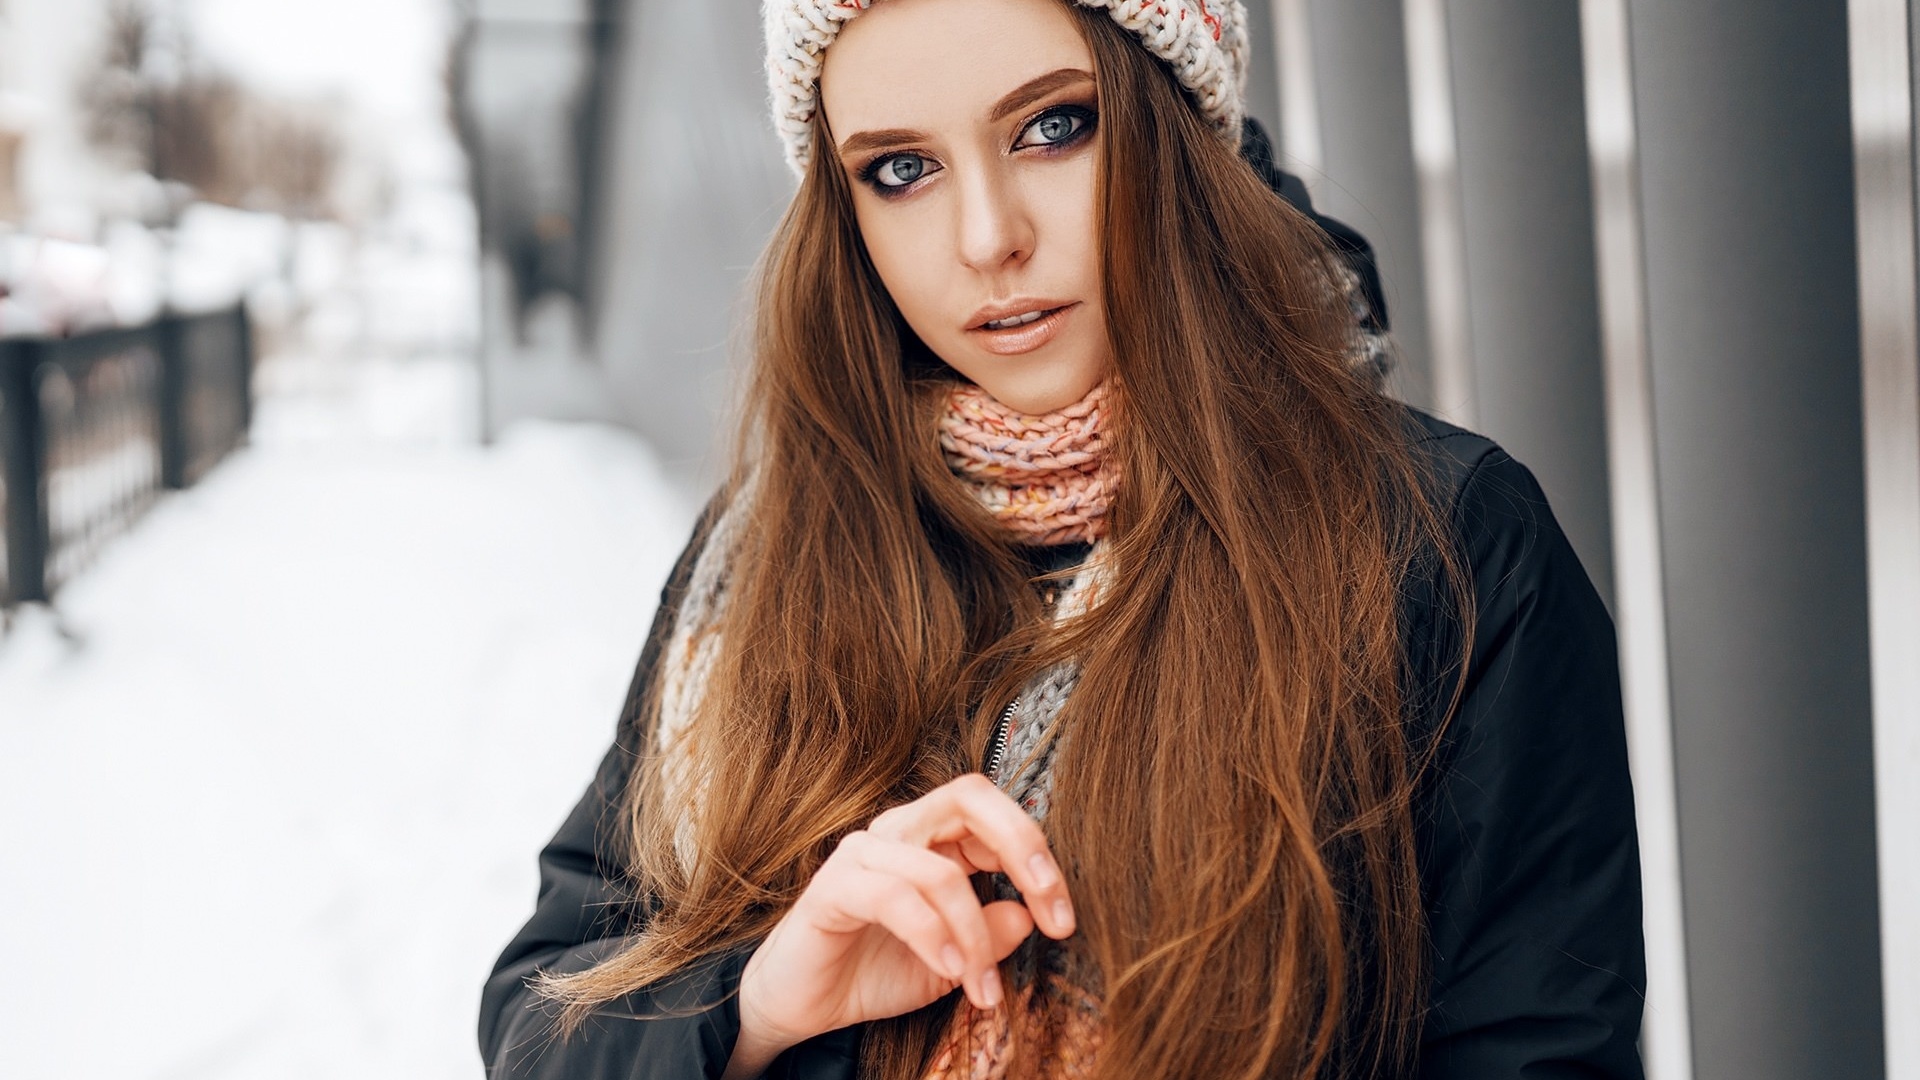 women, portrait, winter, scarf, coats, women outdoors, snow, blue eyes, long hair